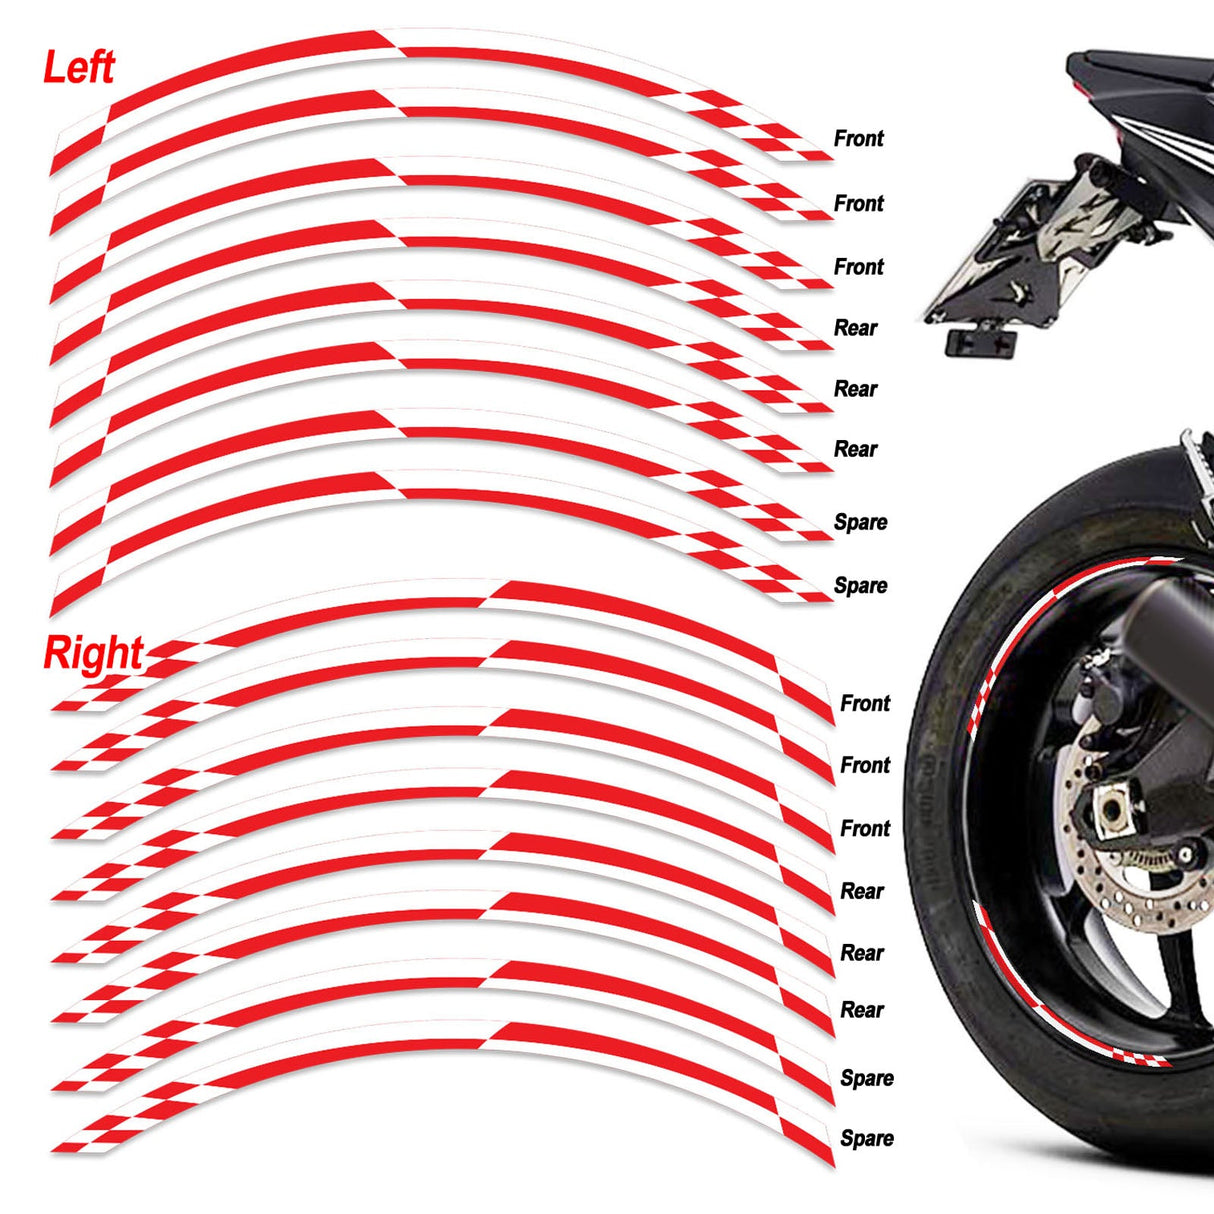 StickerBao Red Universal 17 inch Motorcycle Check01 White Standard Edge Rim Sticker Check Rim Wheel Decal For For Aprilia